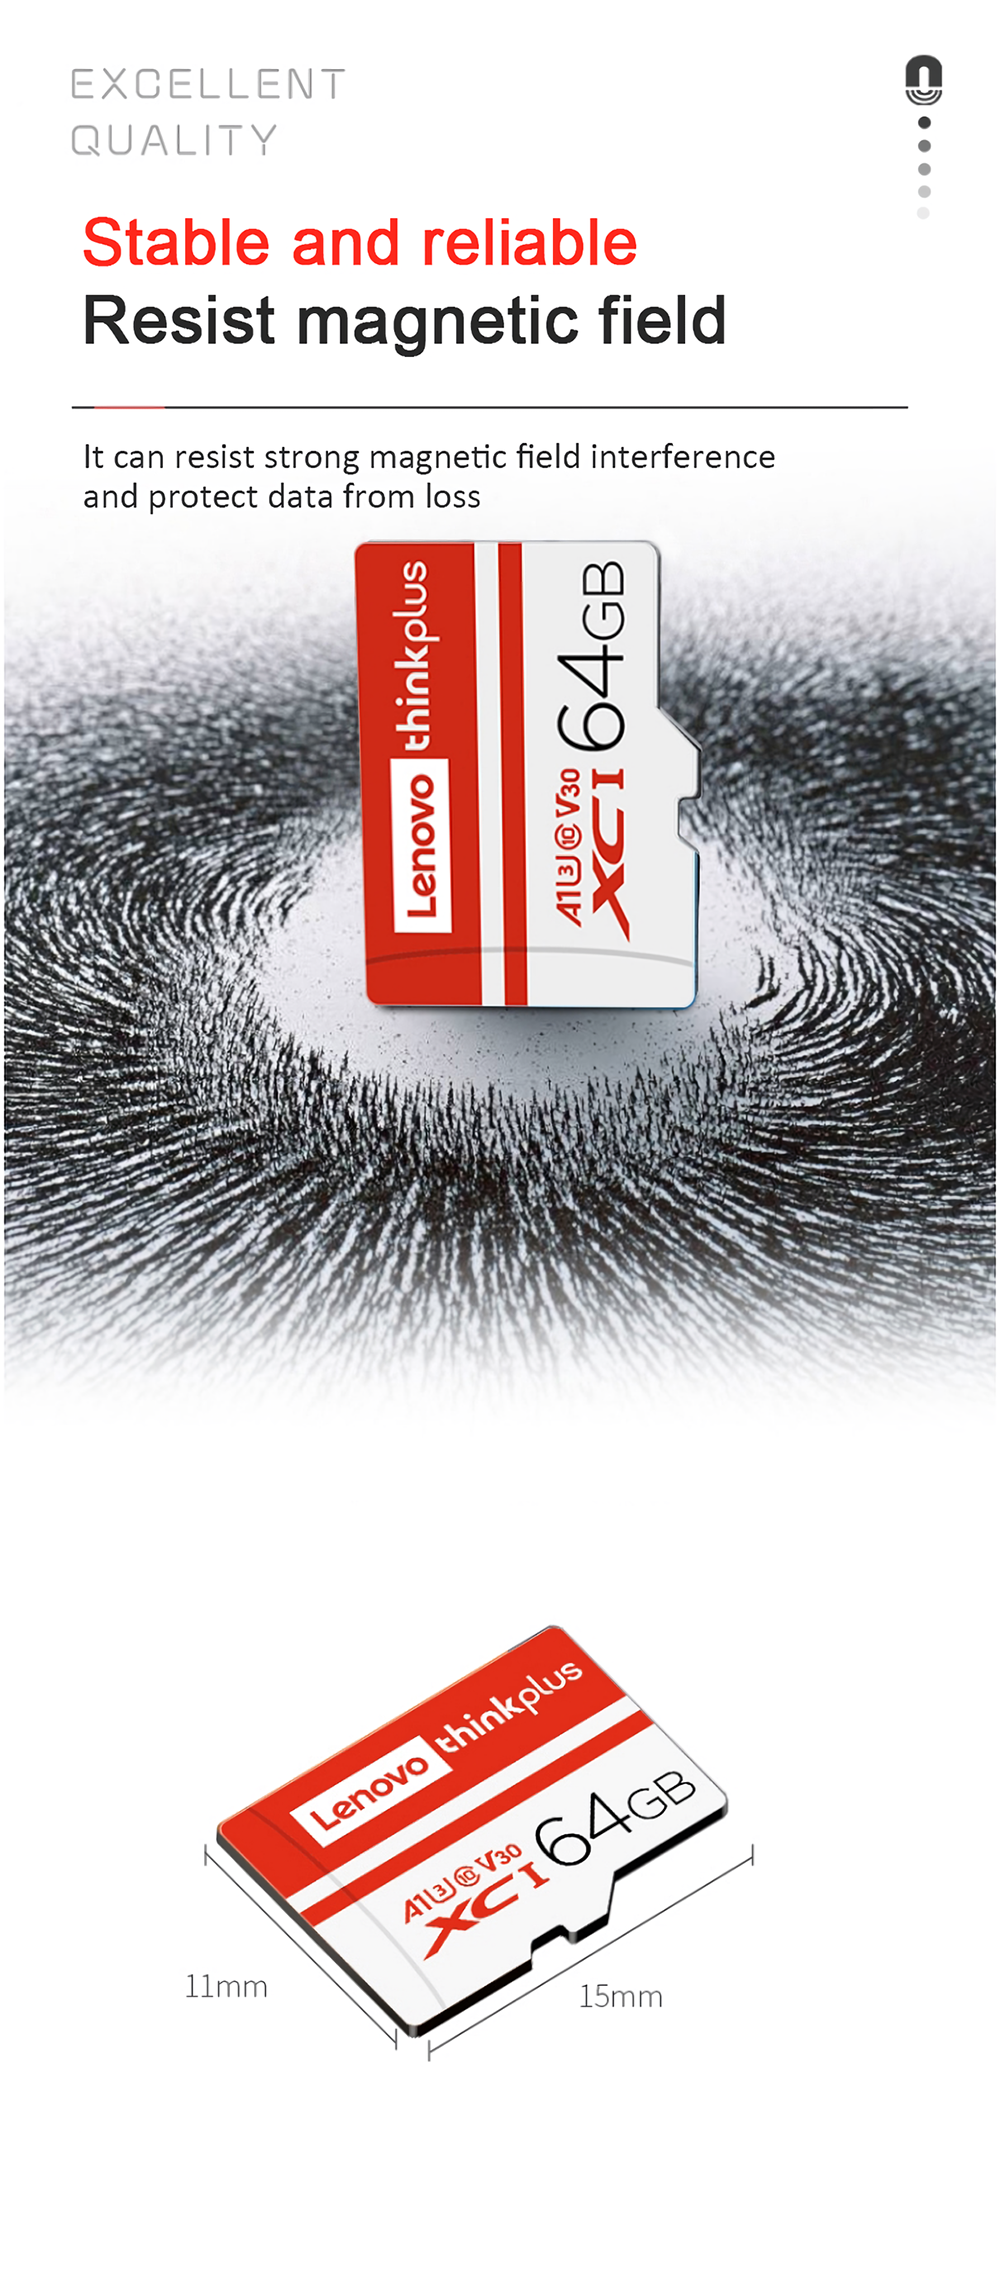 Lenovo-ThinkPlus-TF101-C10-A1-TF-Memory-Card-90MBS-32G-64G-128G-TF-Flash-Card-IPX7-Waterproof-Smart--1907343-7